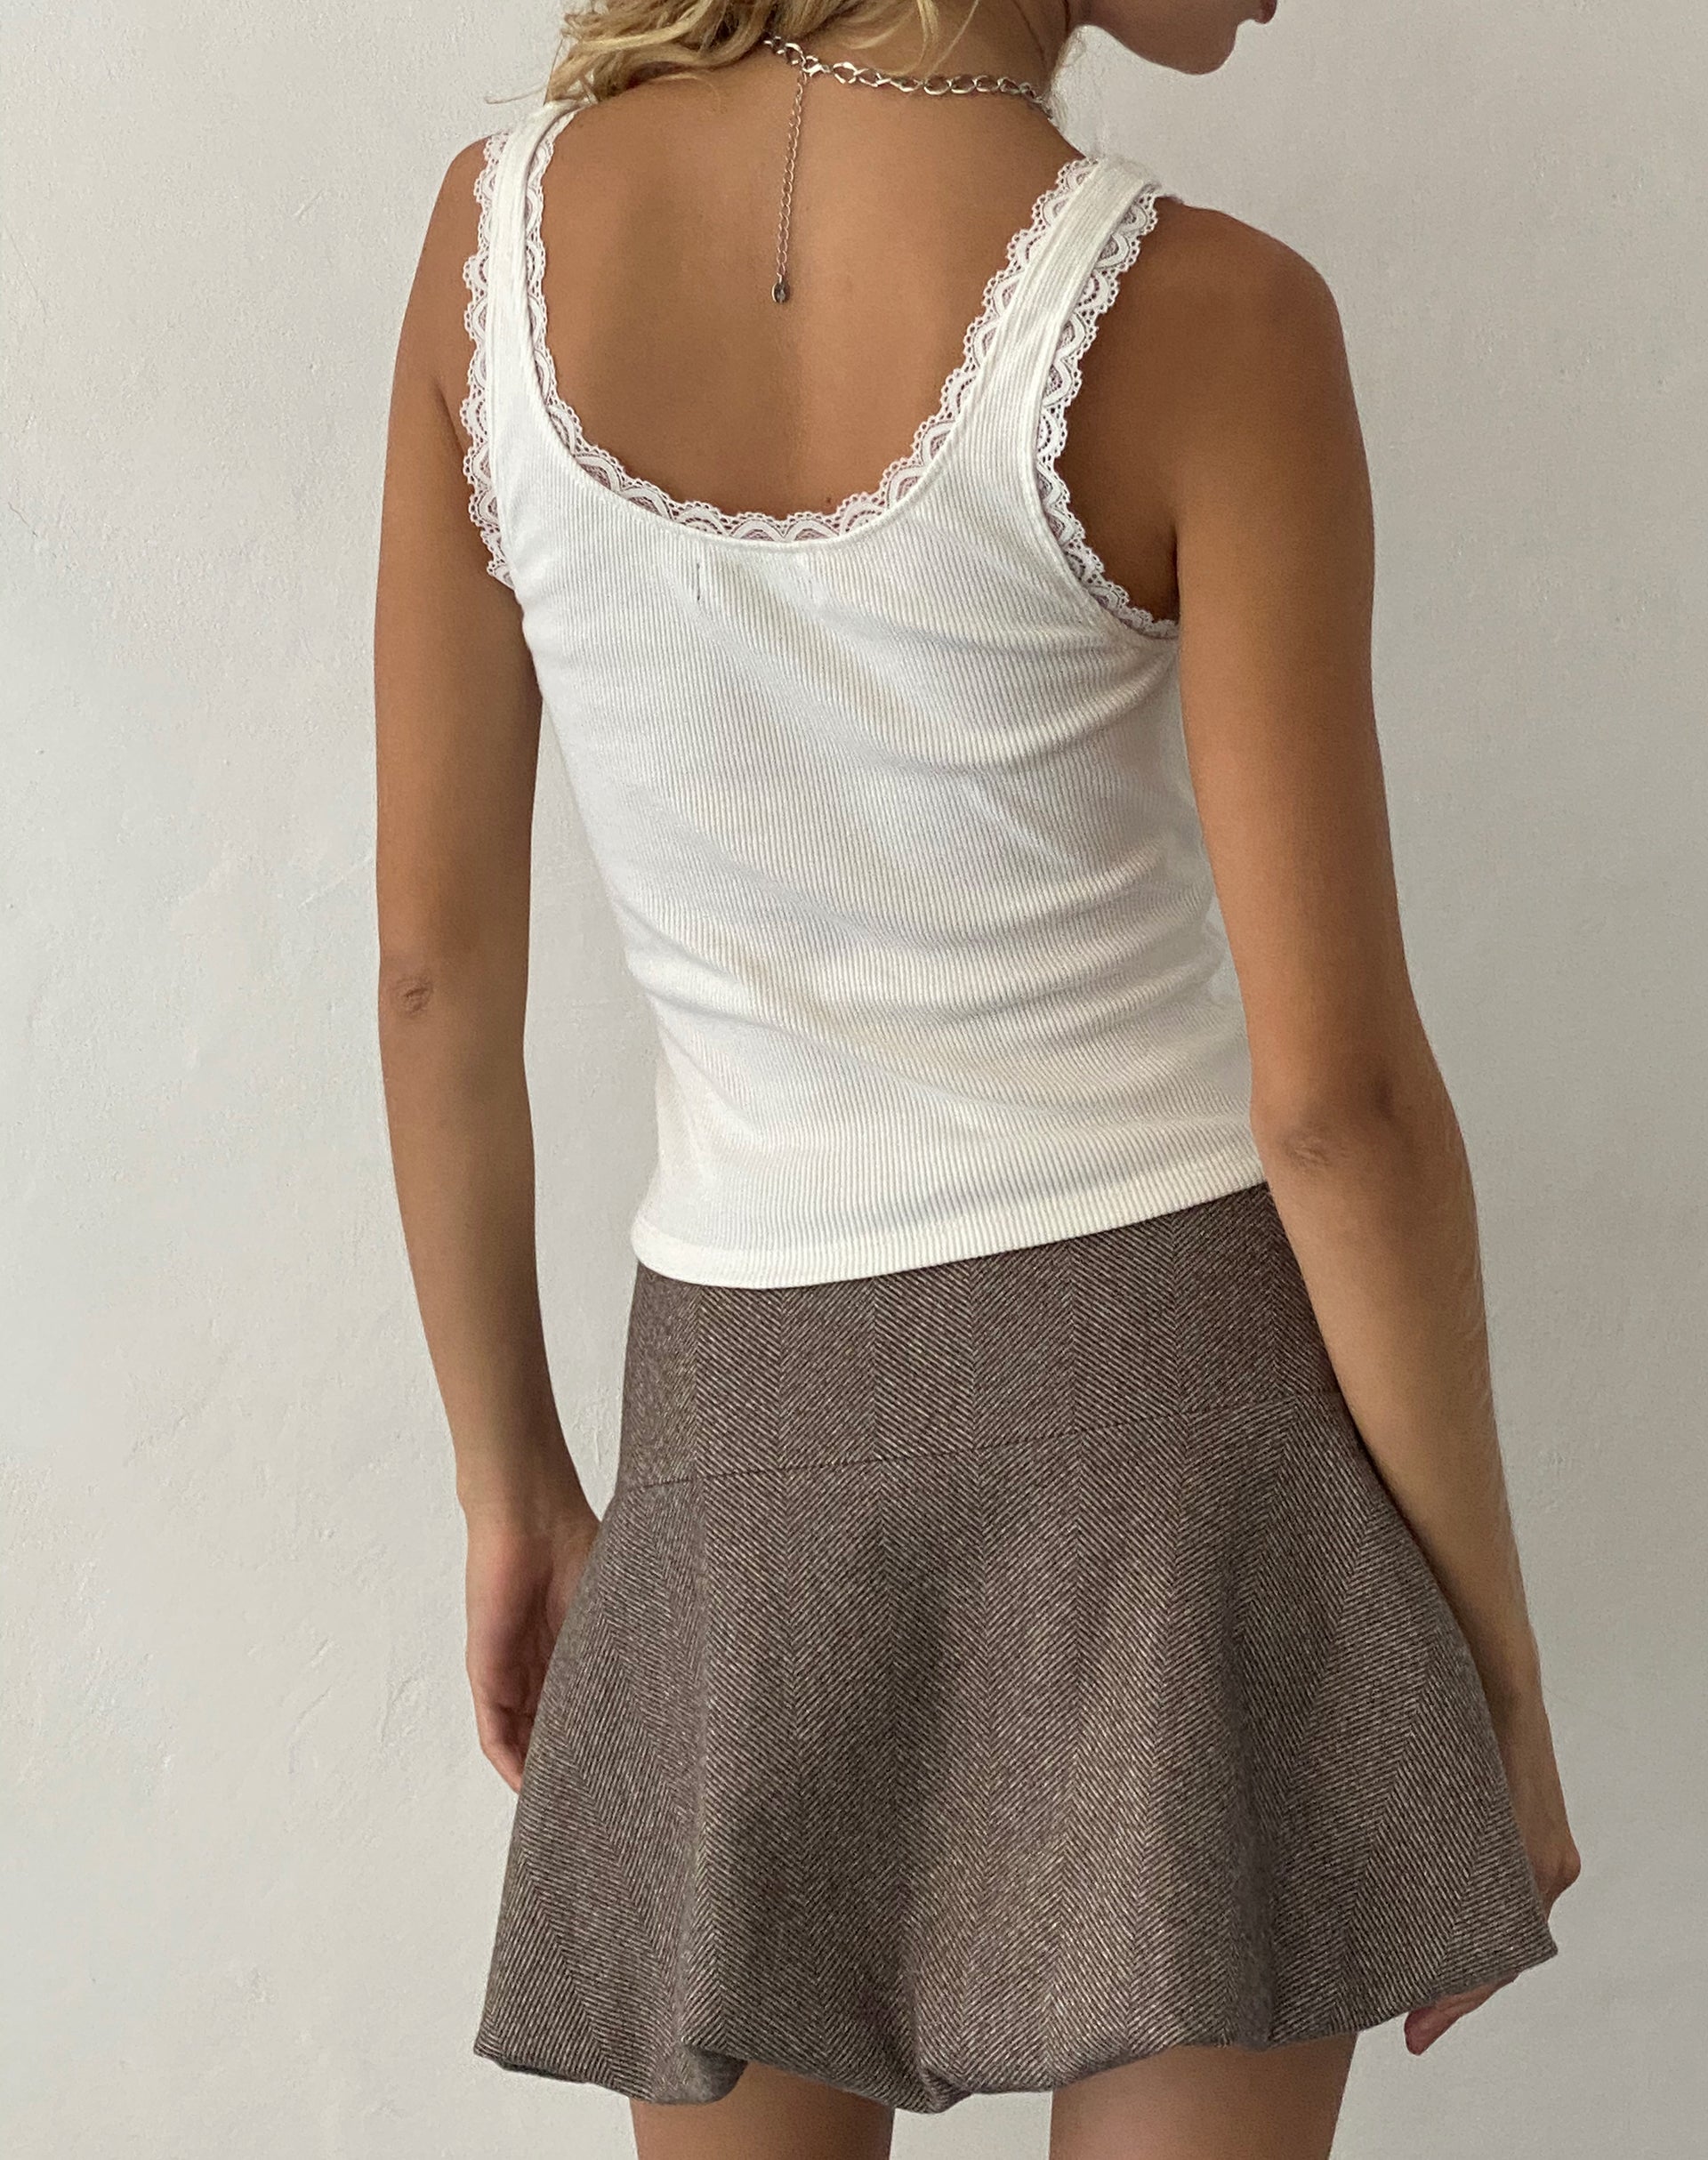 Image of Celina Puffball Mini Skirt in Dark Brown Tailoring